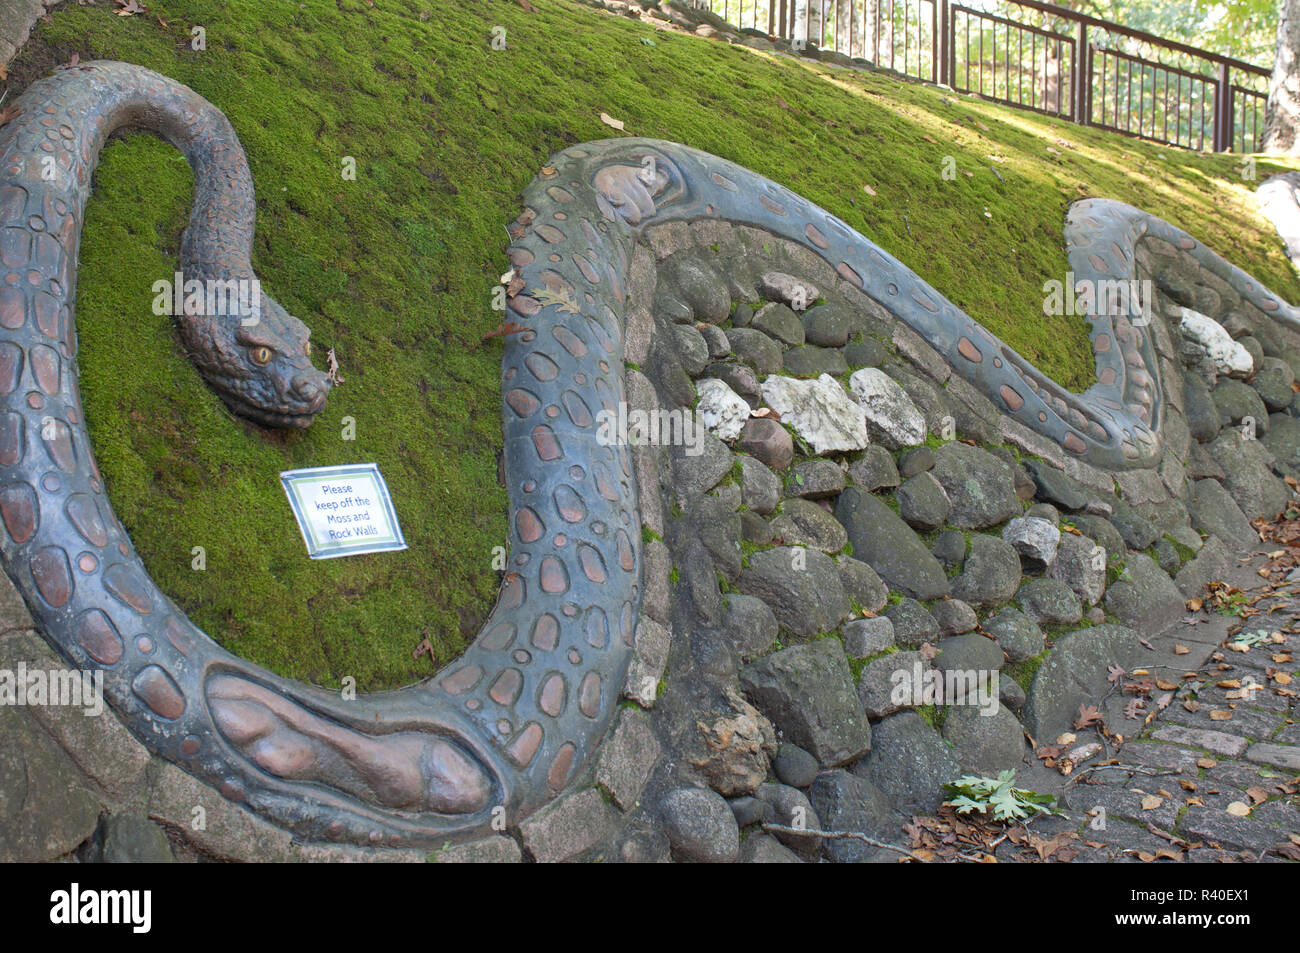 USA (Minnesota), Eagan, Caponi Art Park, Stone sculpture Serpent Banque D'Images